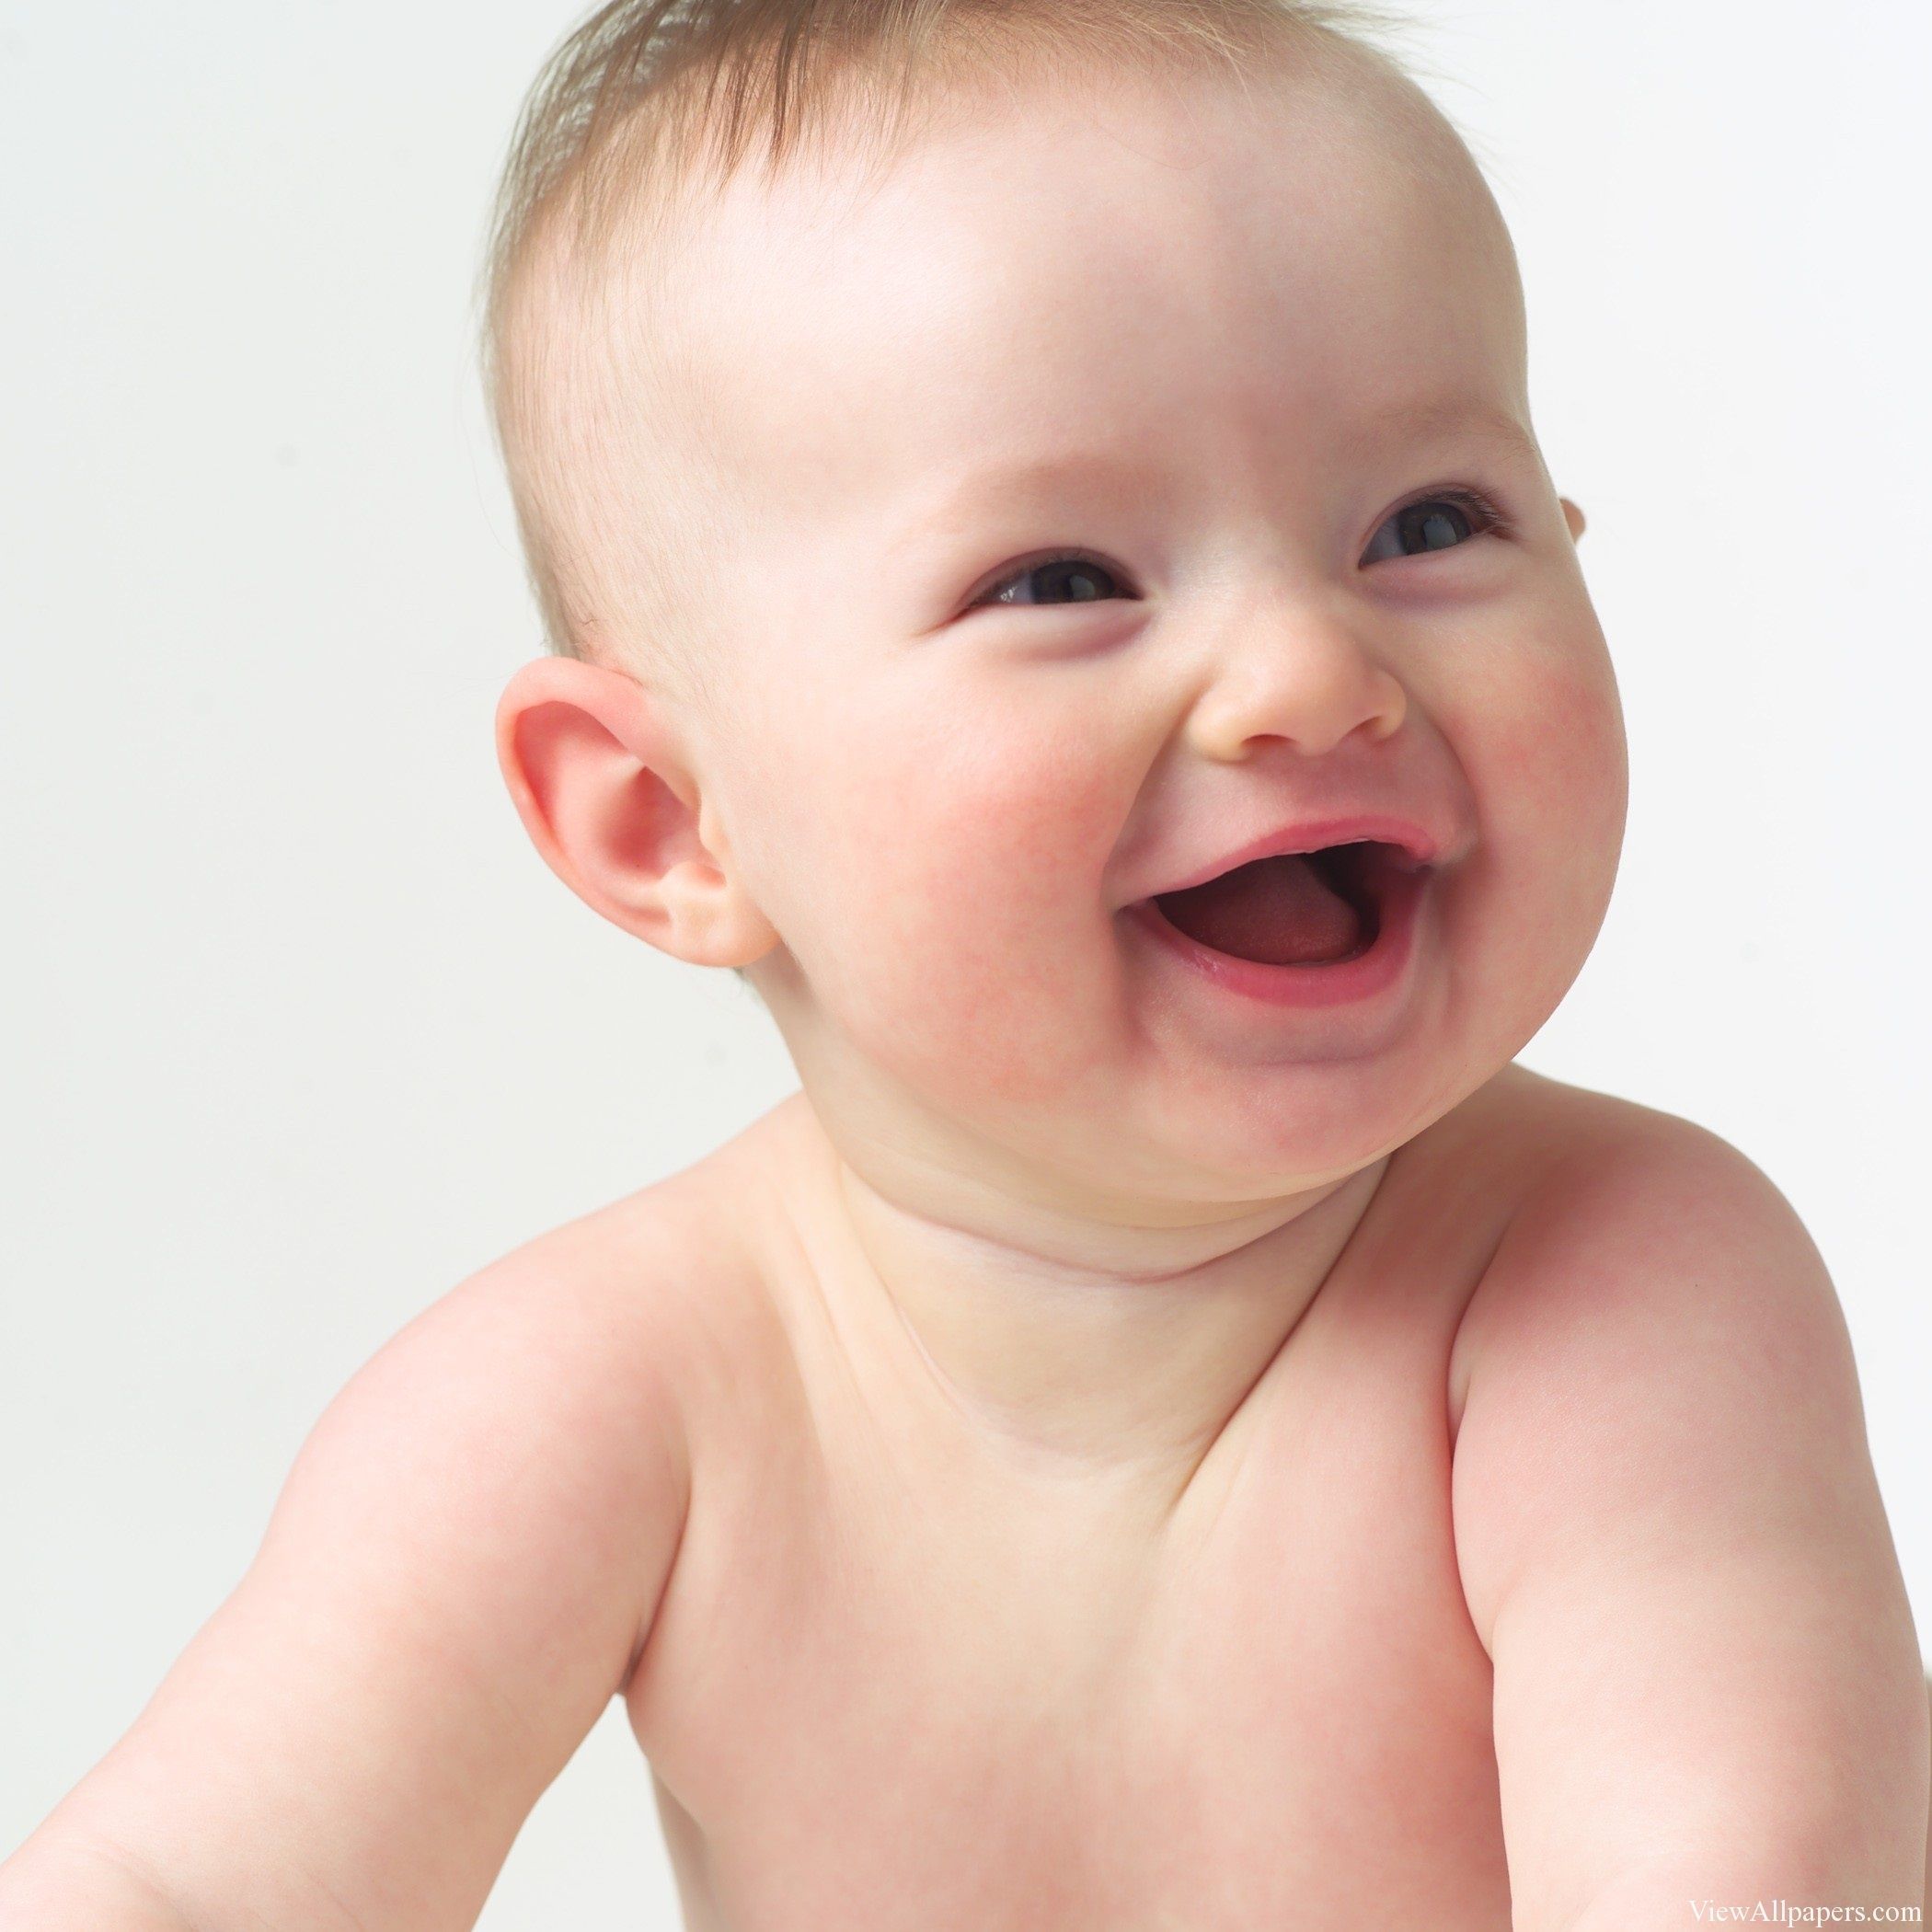 Baby Laughing Wallpaper. Baby wallpaper hd, Cute baby wallpaper, Baby wallpaper